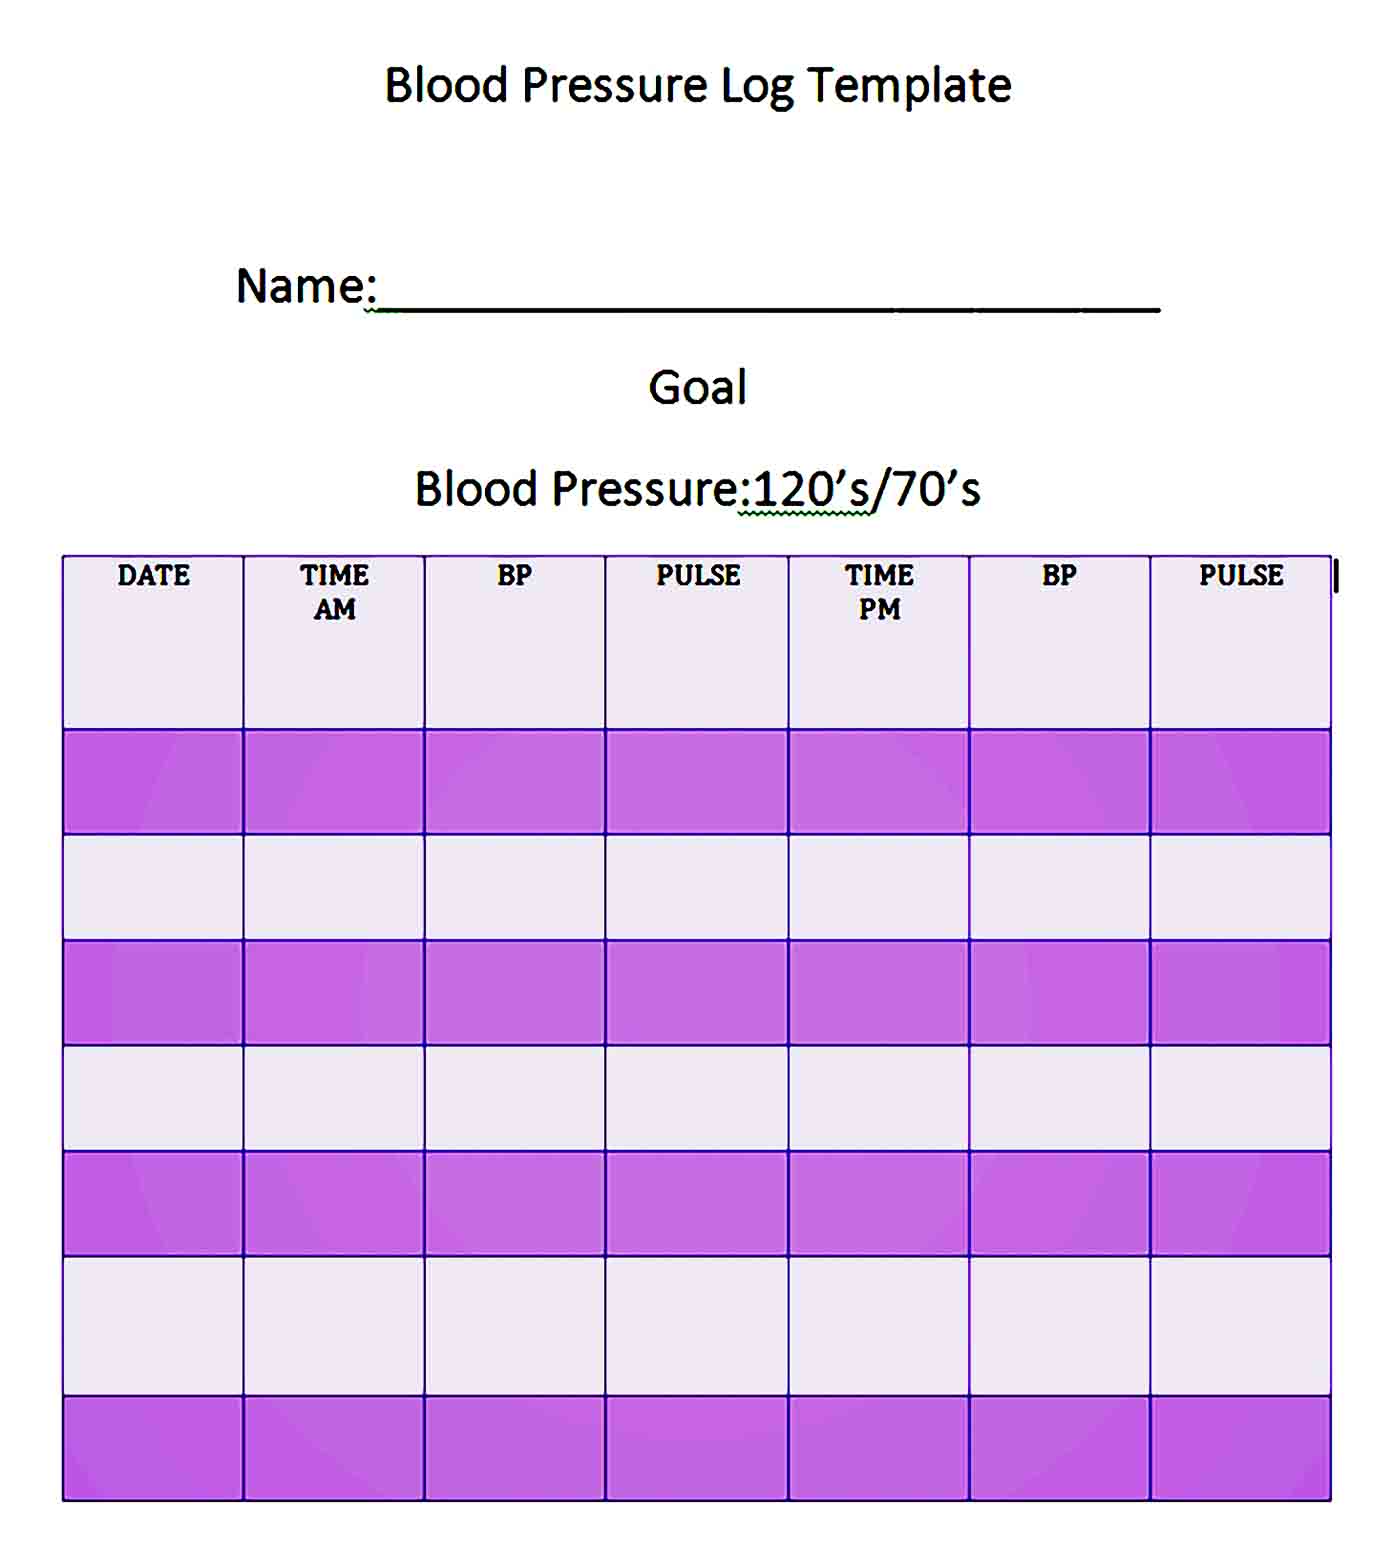 Blood Pressure Log Template 17